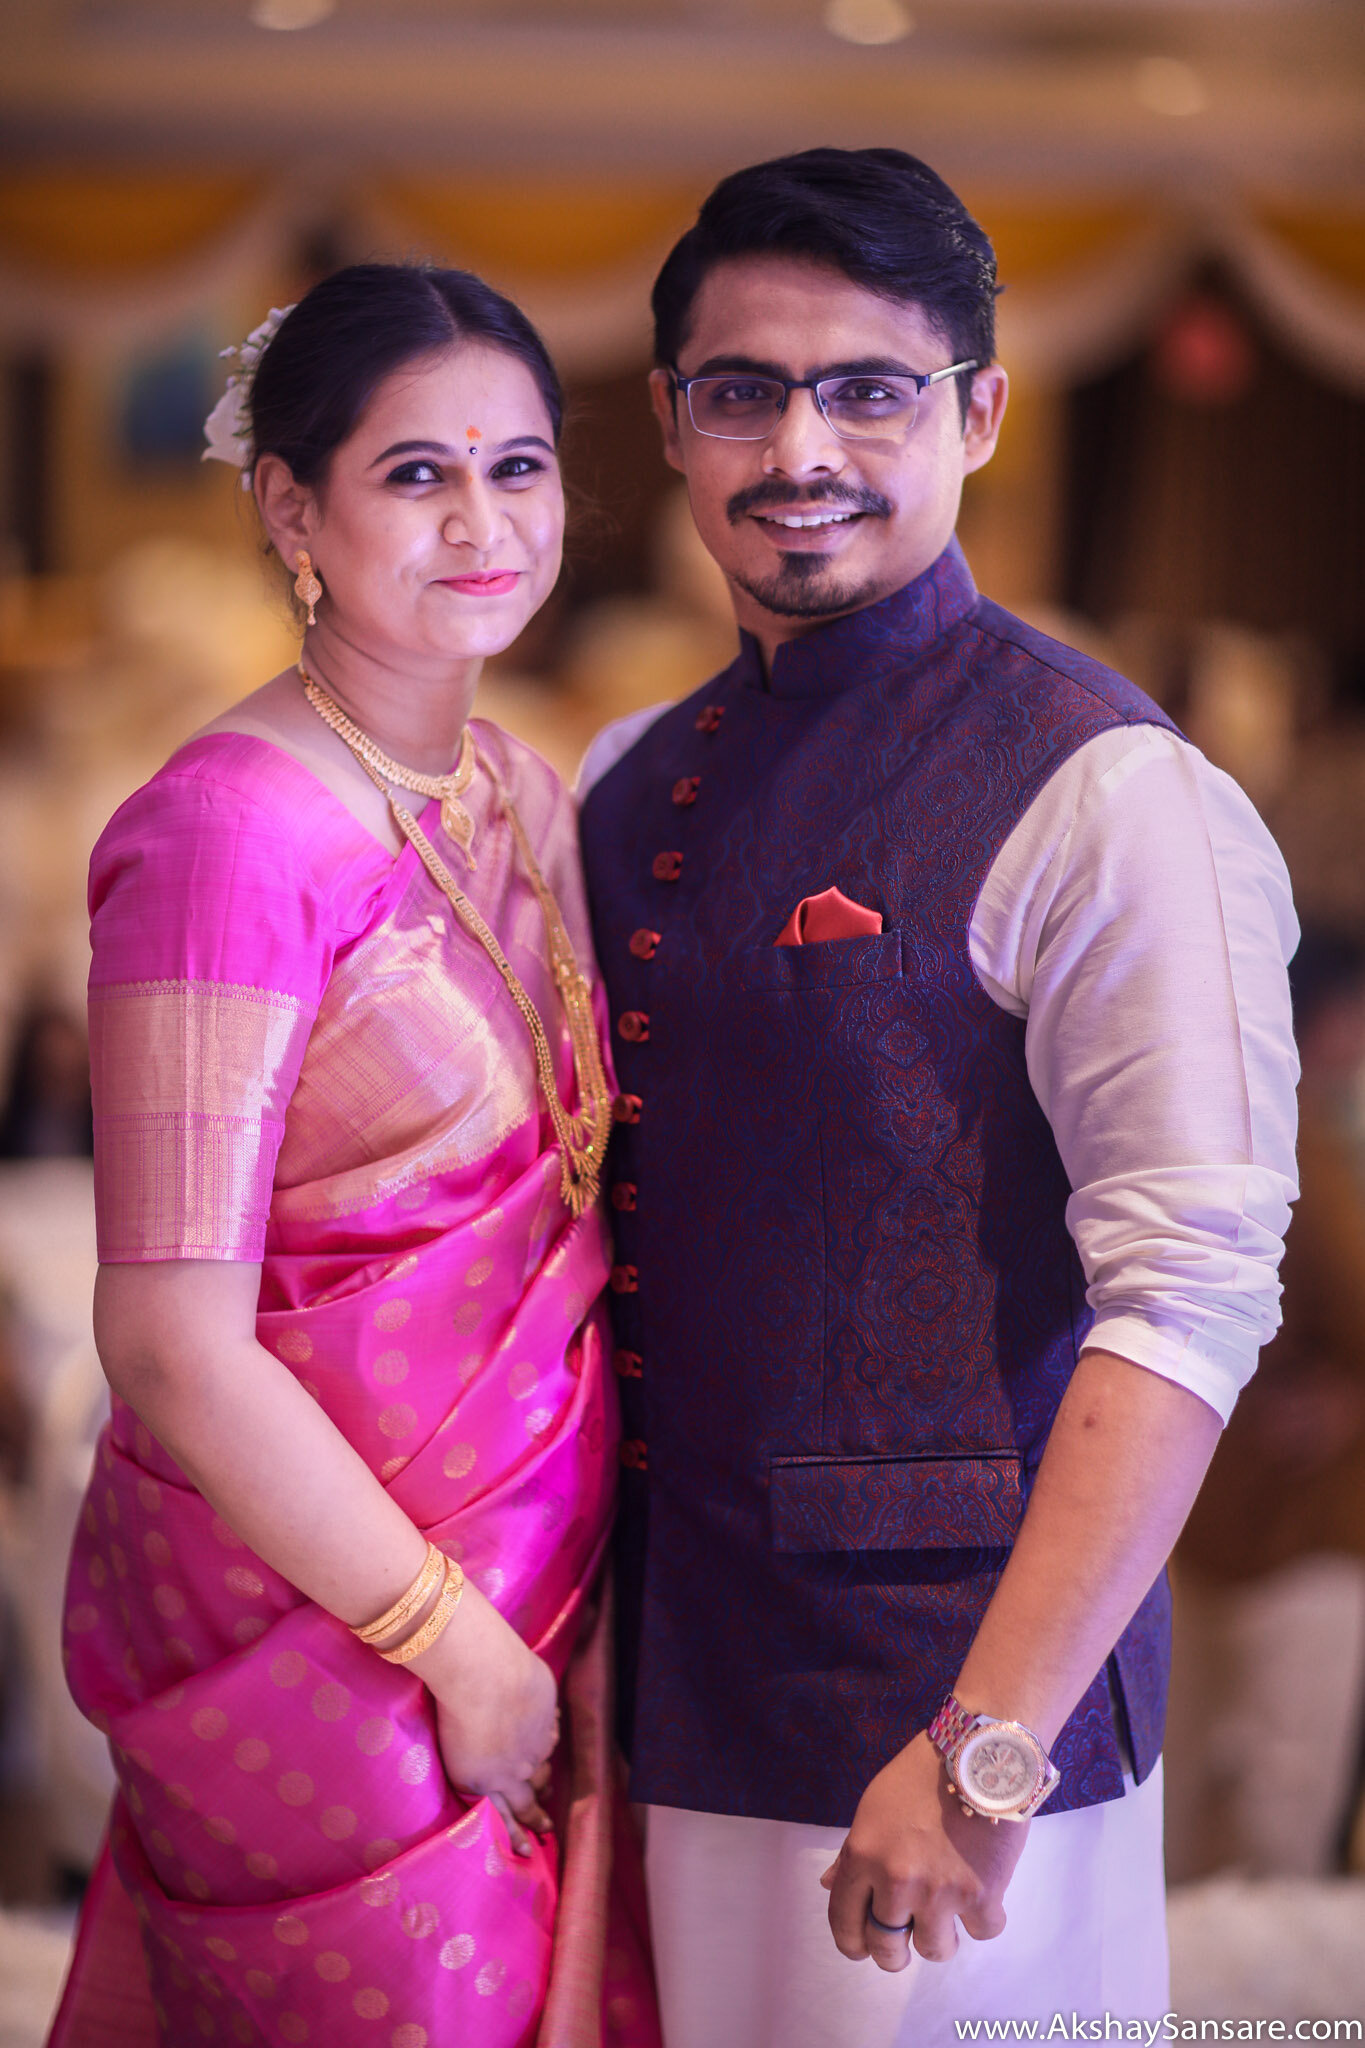 Rutu x Gaurang Engagement Akshay Sansare Photography Candid Photographer based in Mumbai best India Cinematic Wedding Films_-5.jpg